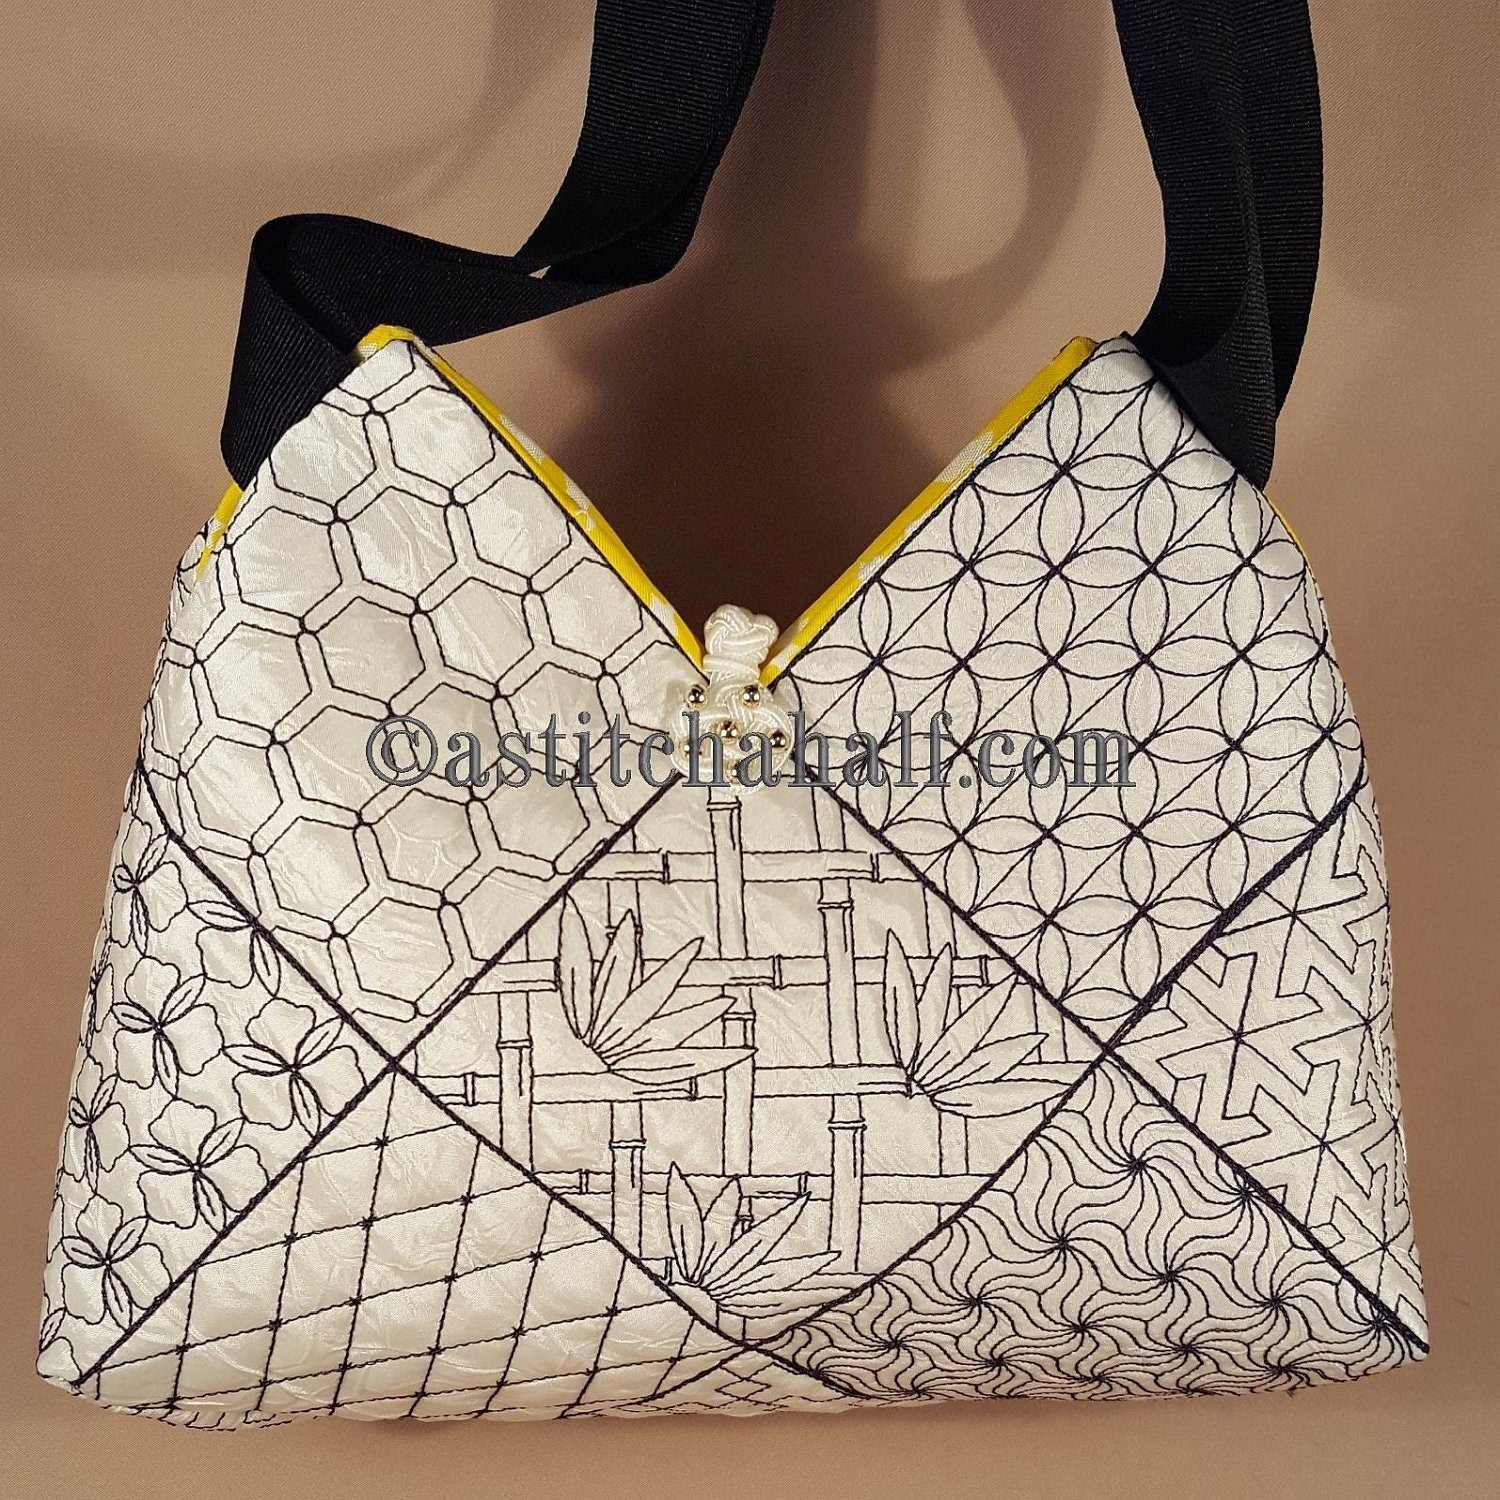 Kikko Sashiko Quilt Blocks and Tote Bag - aStitch aHalf